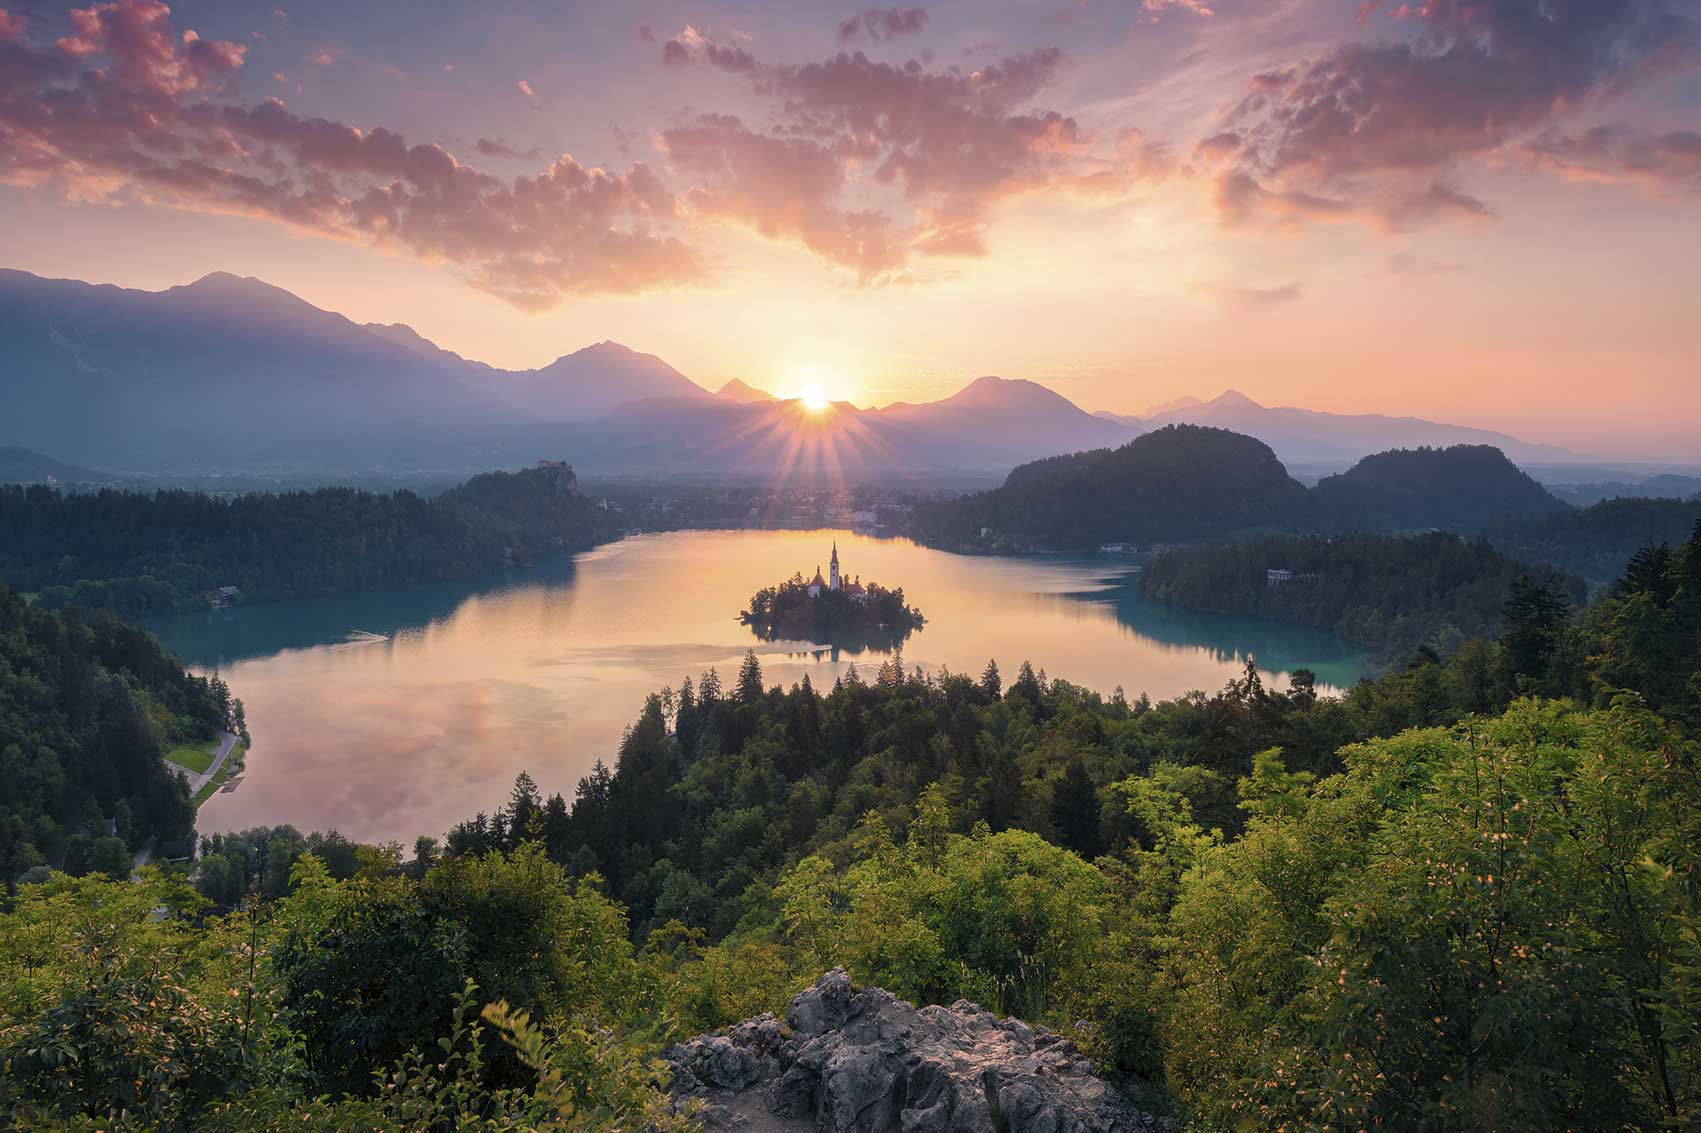 Puzzle Ravensburger Lago Bled, Eslovênia de 3000 Pçs